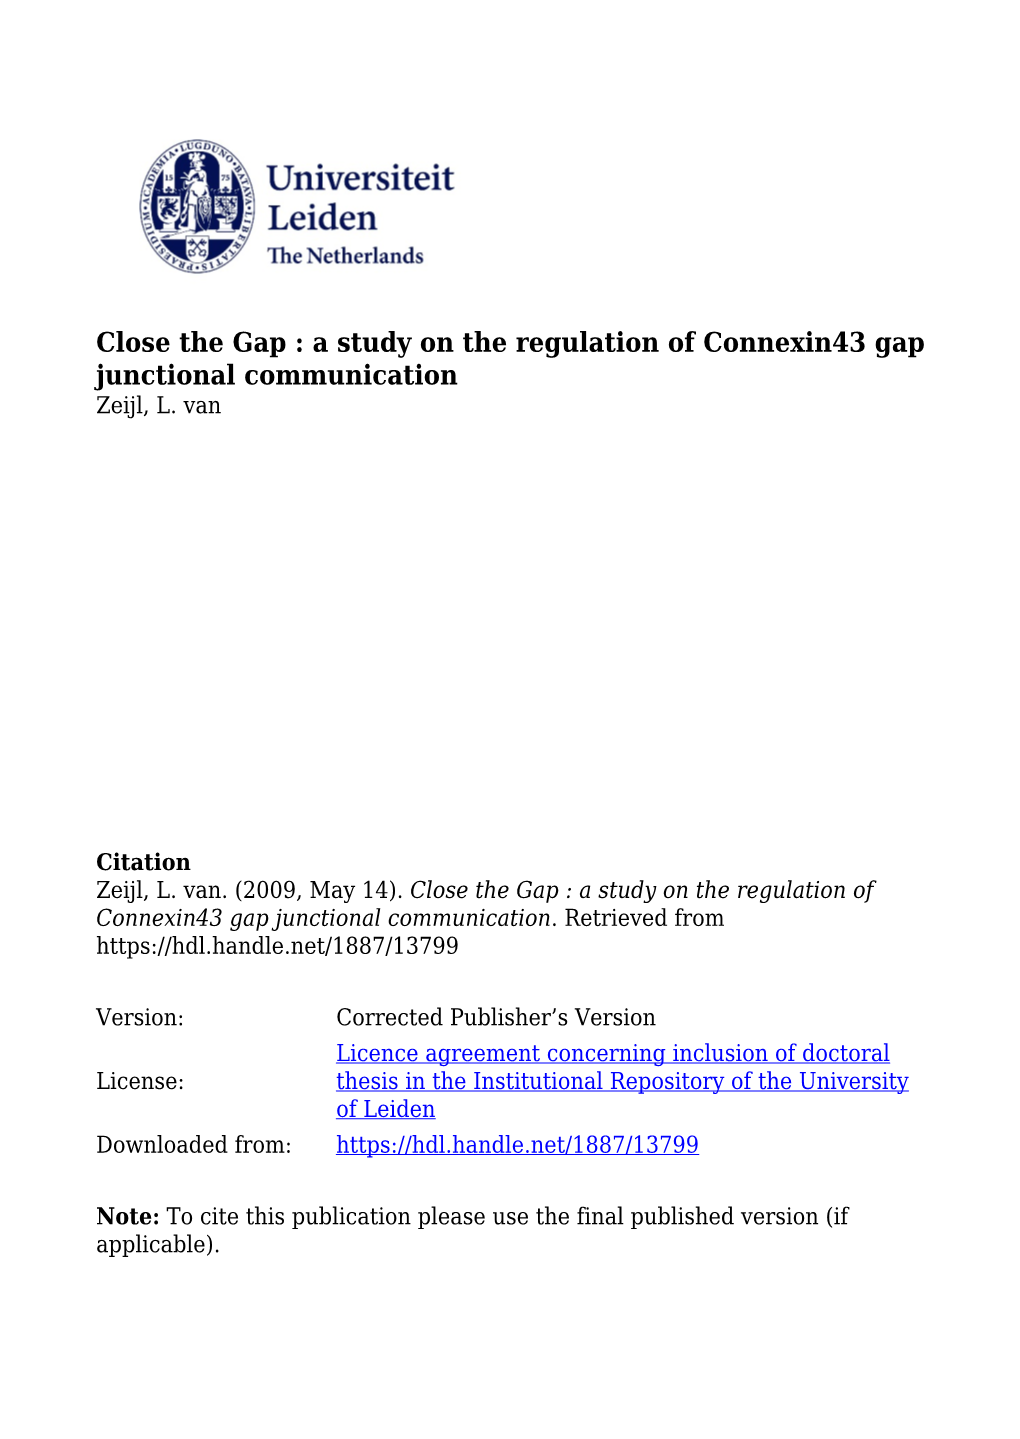 Close the Gap : a Study on the Regulation of Connexin43 Gap Junctional Communication Zeijl, L